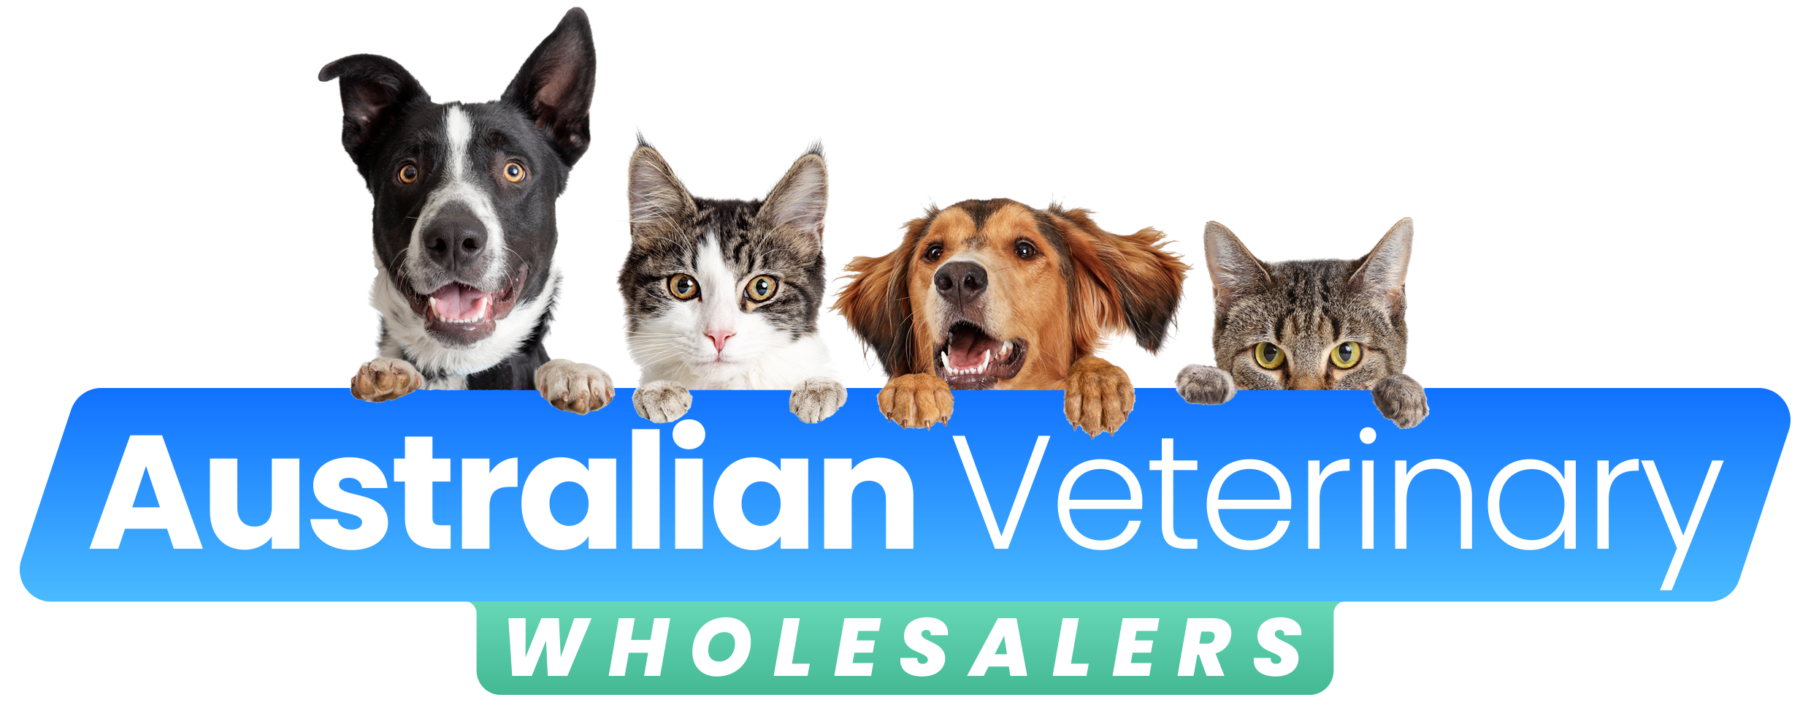 Australian Veterinary Wholesalers